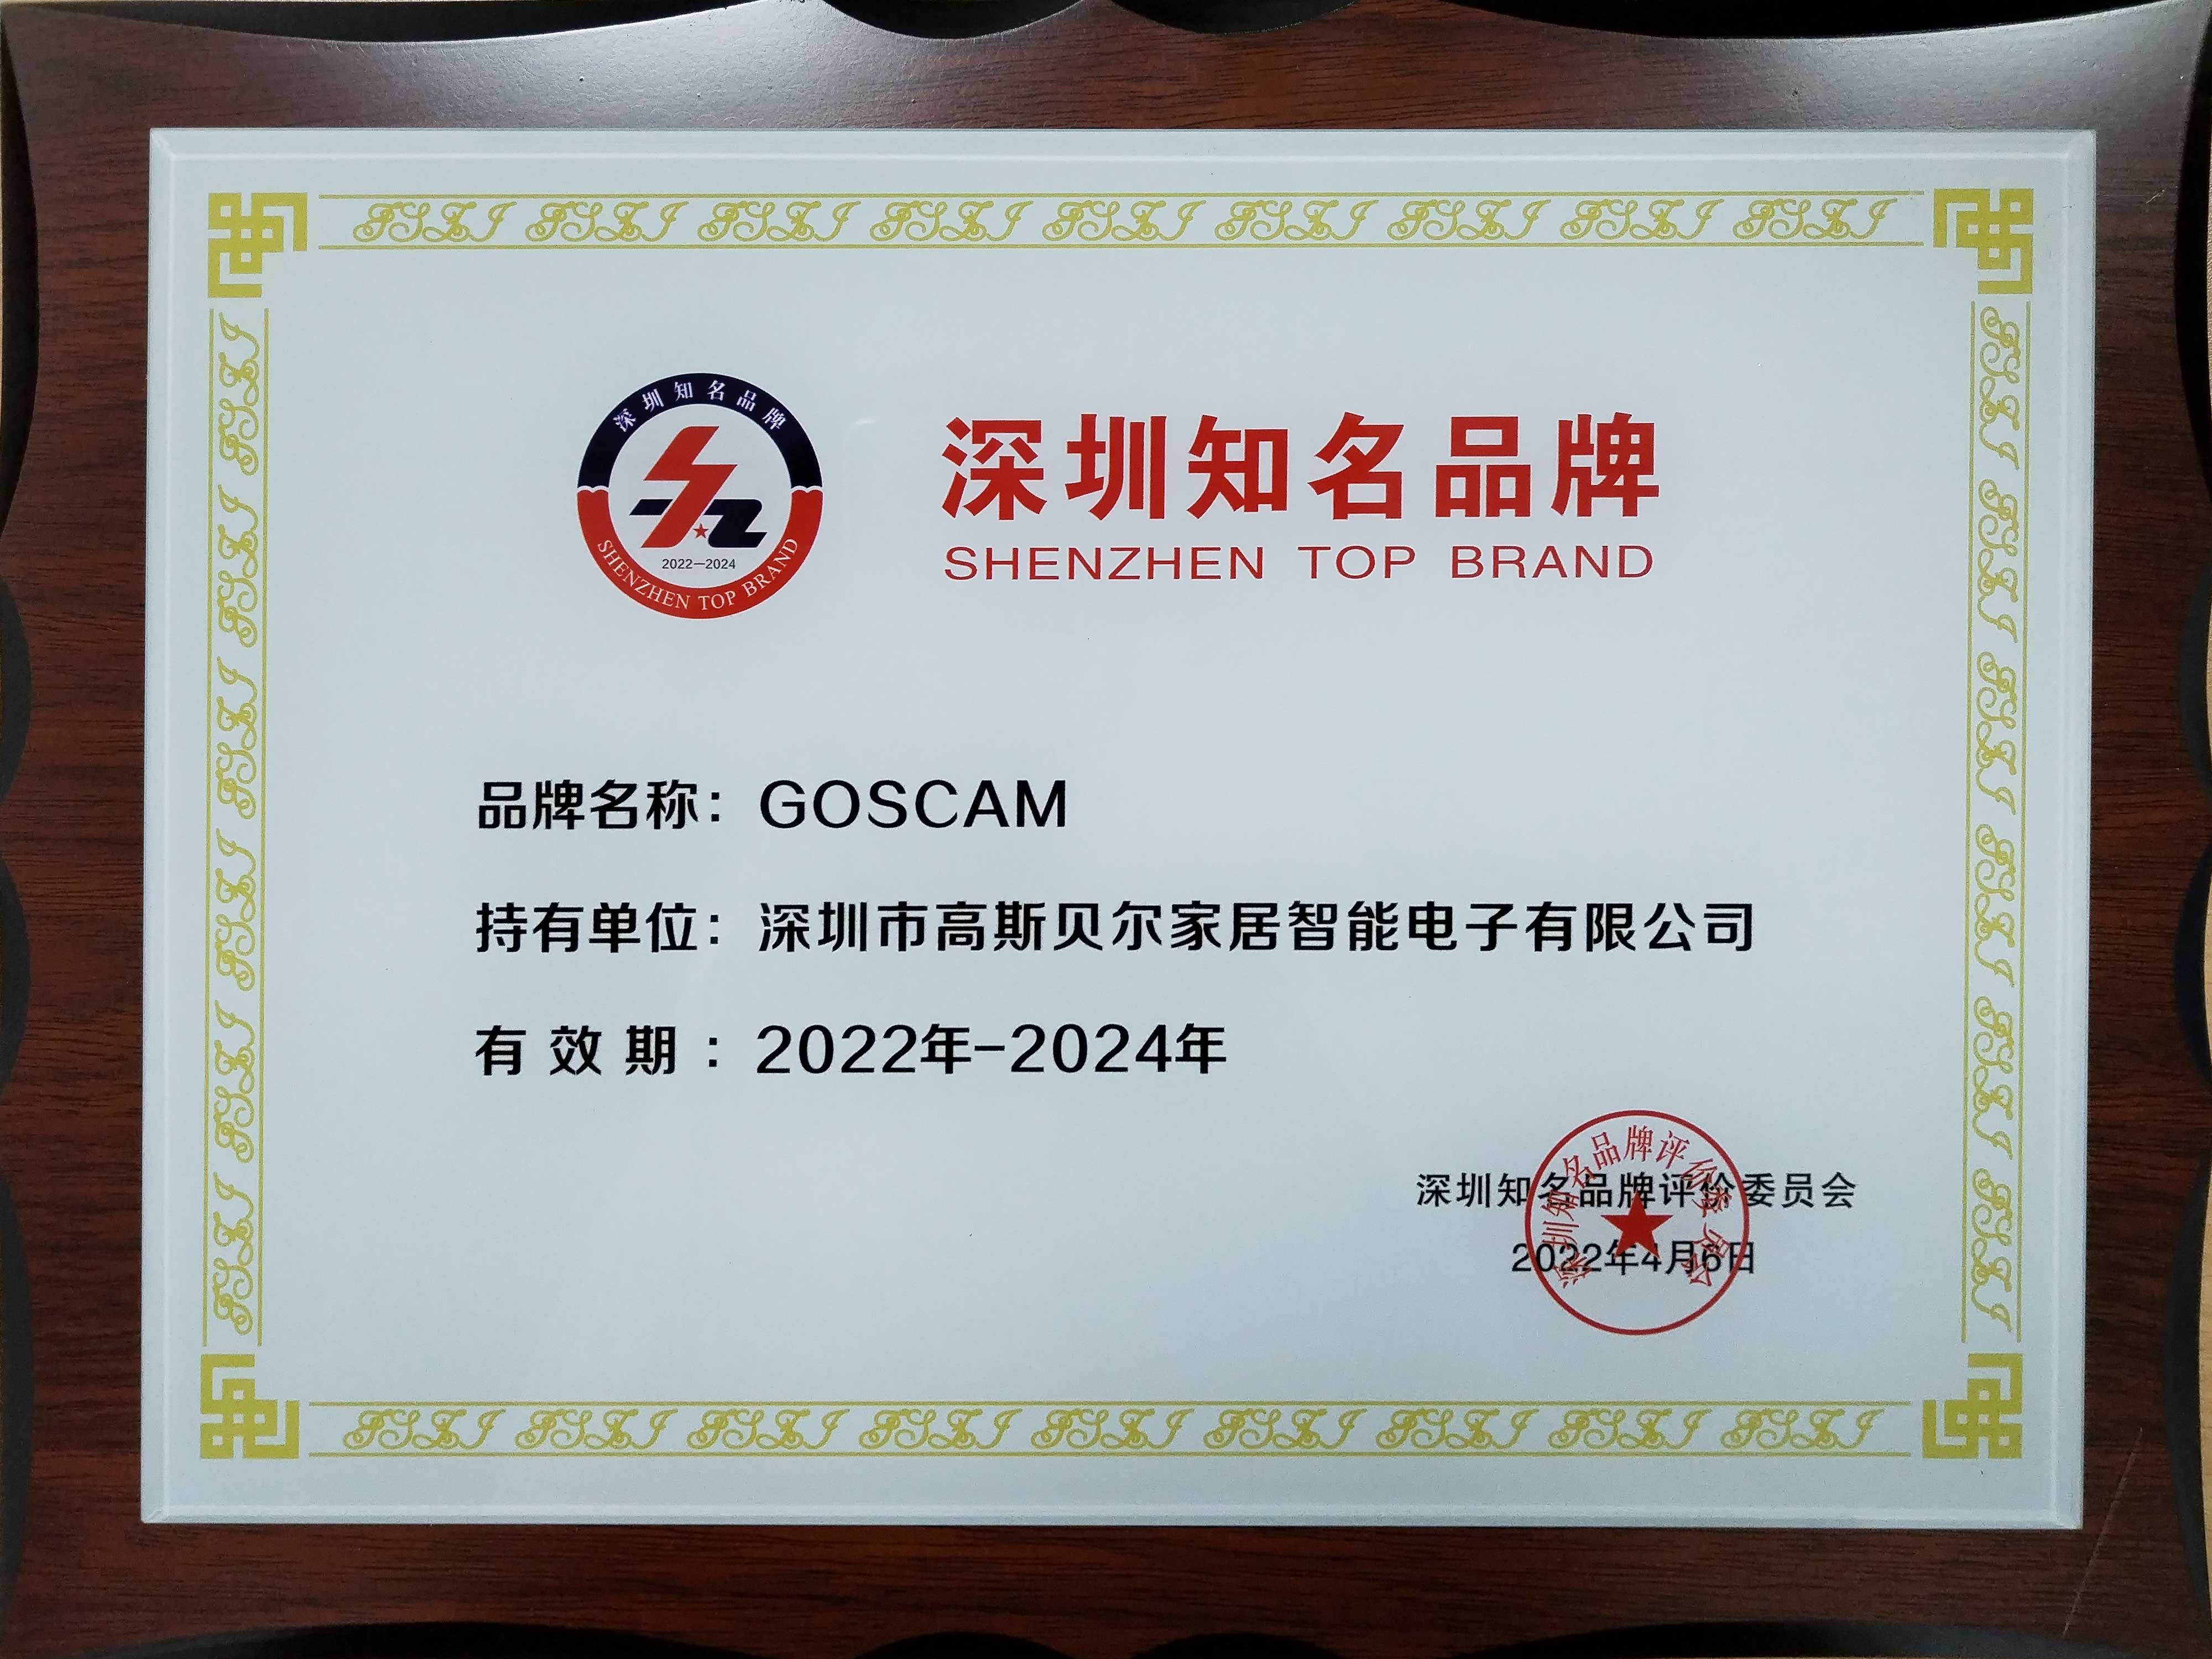 GOSCAM又上深圳知名品牌榜啦！！！